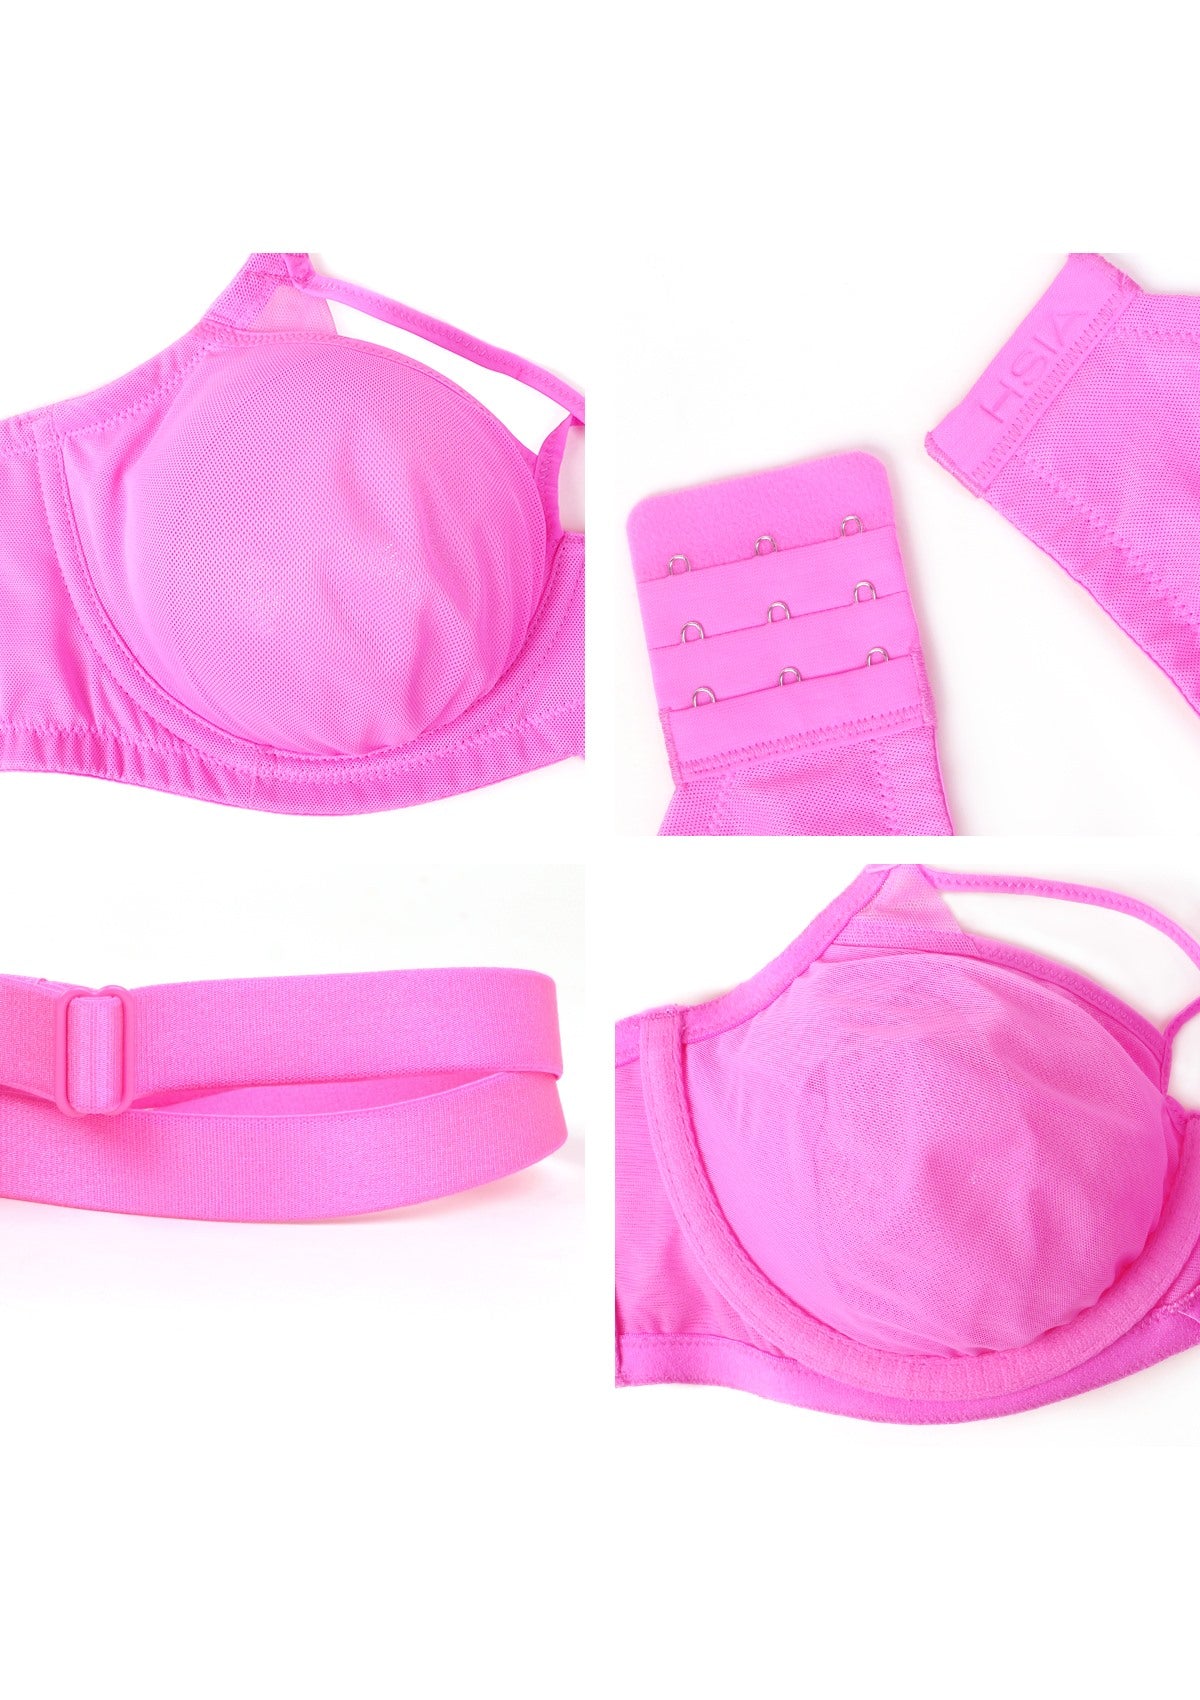 HSIA Billie Cross Front Strap Smooth Sheer Mesh Comfy Underwire Bra - Barbie Pink / 36 / G